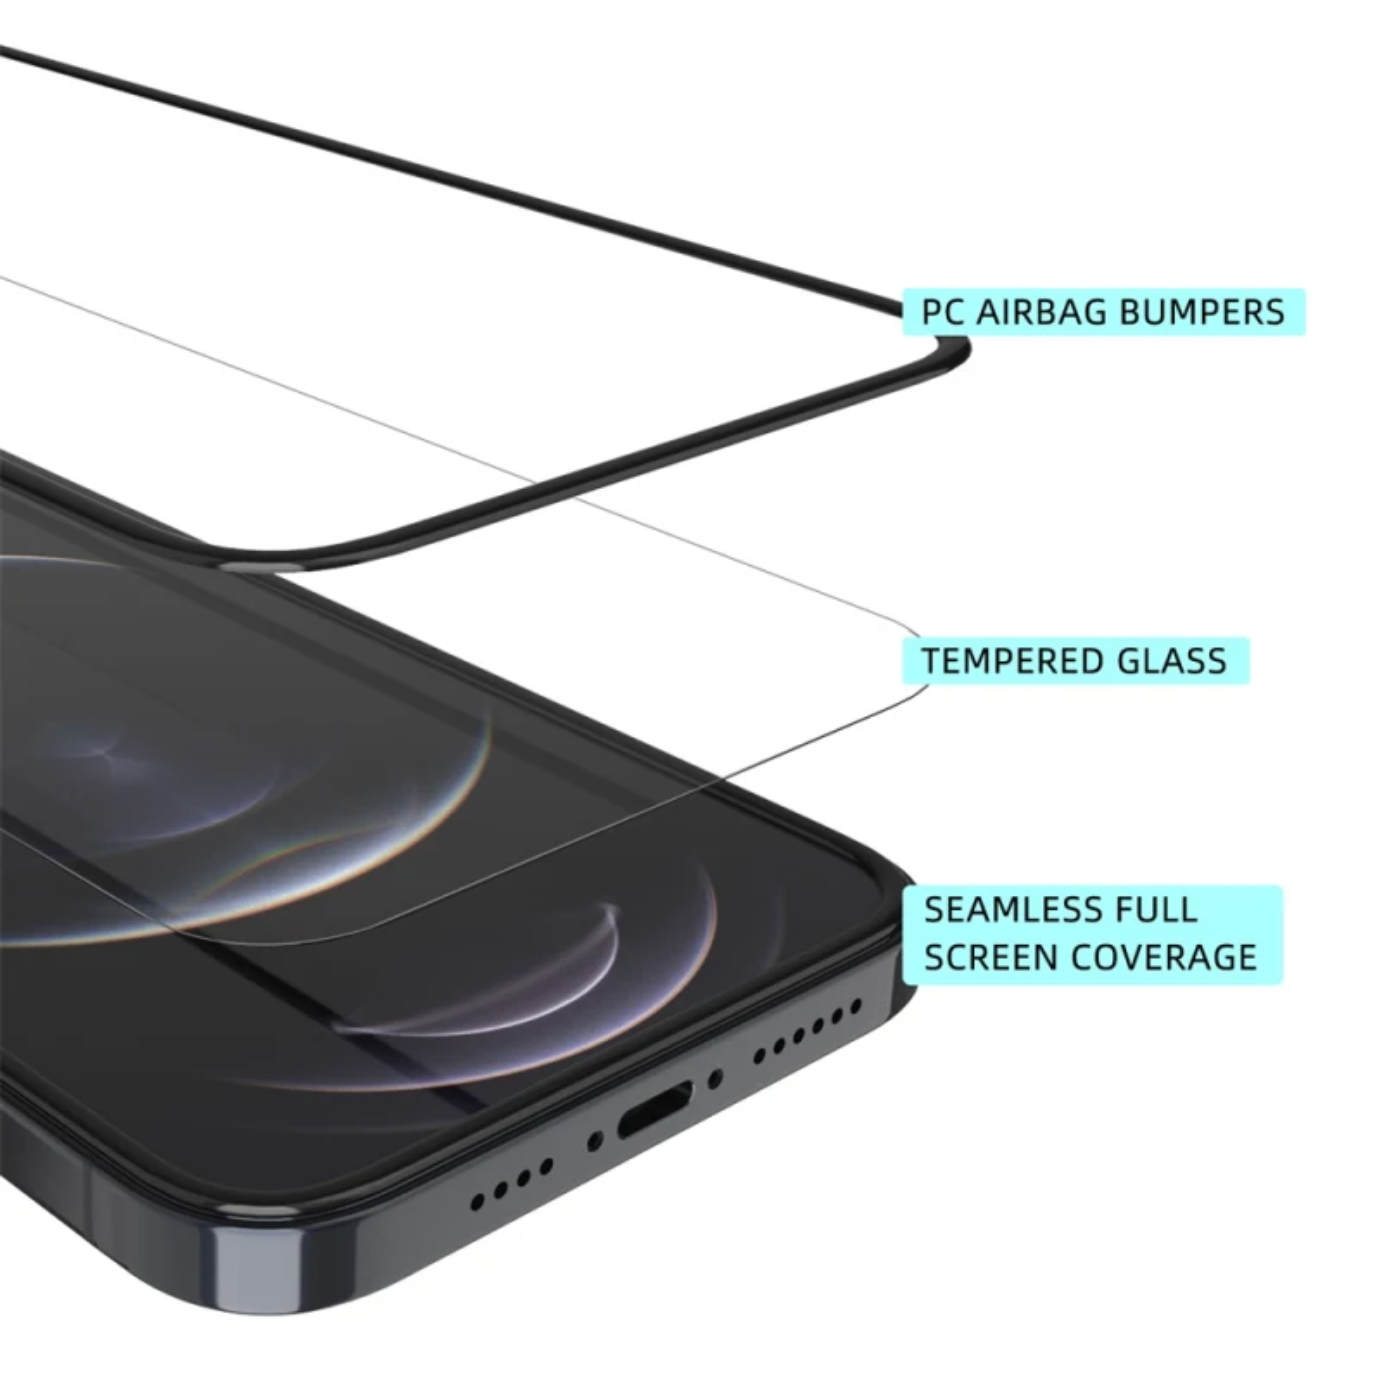 Lámina Vidrio Templado 2.5D iPhone 12 / 12 Pro - Transparente